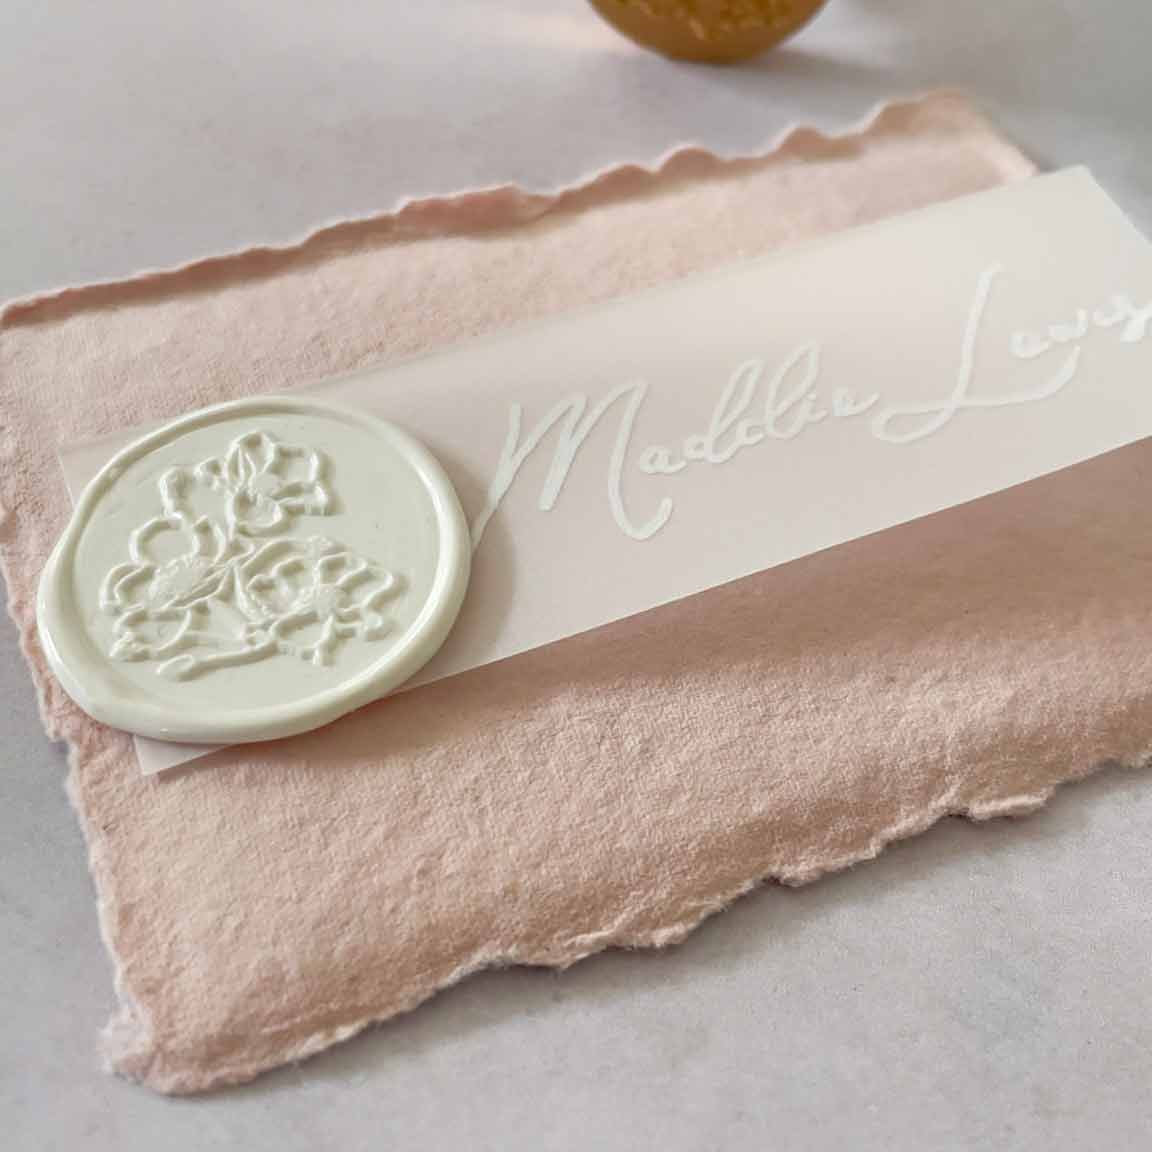 Blush Handmade Paper. Card and Envelopes (Vegan)  ImagineDIY   